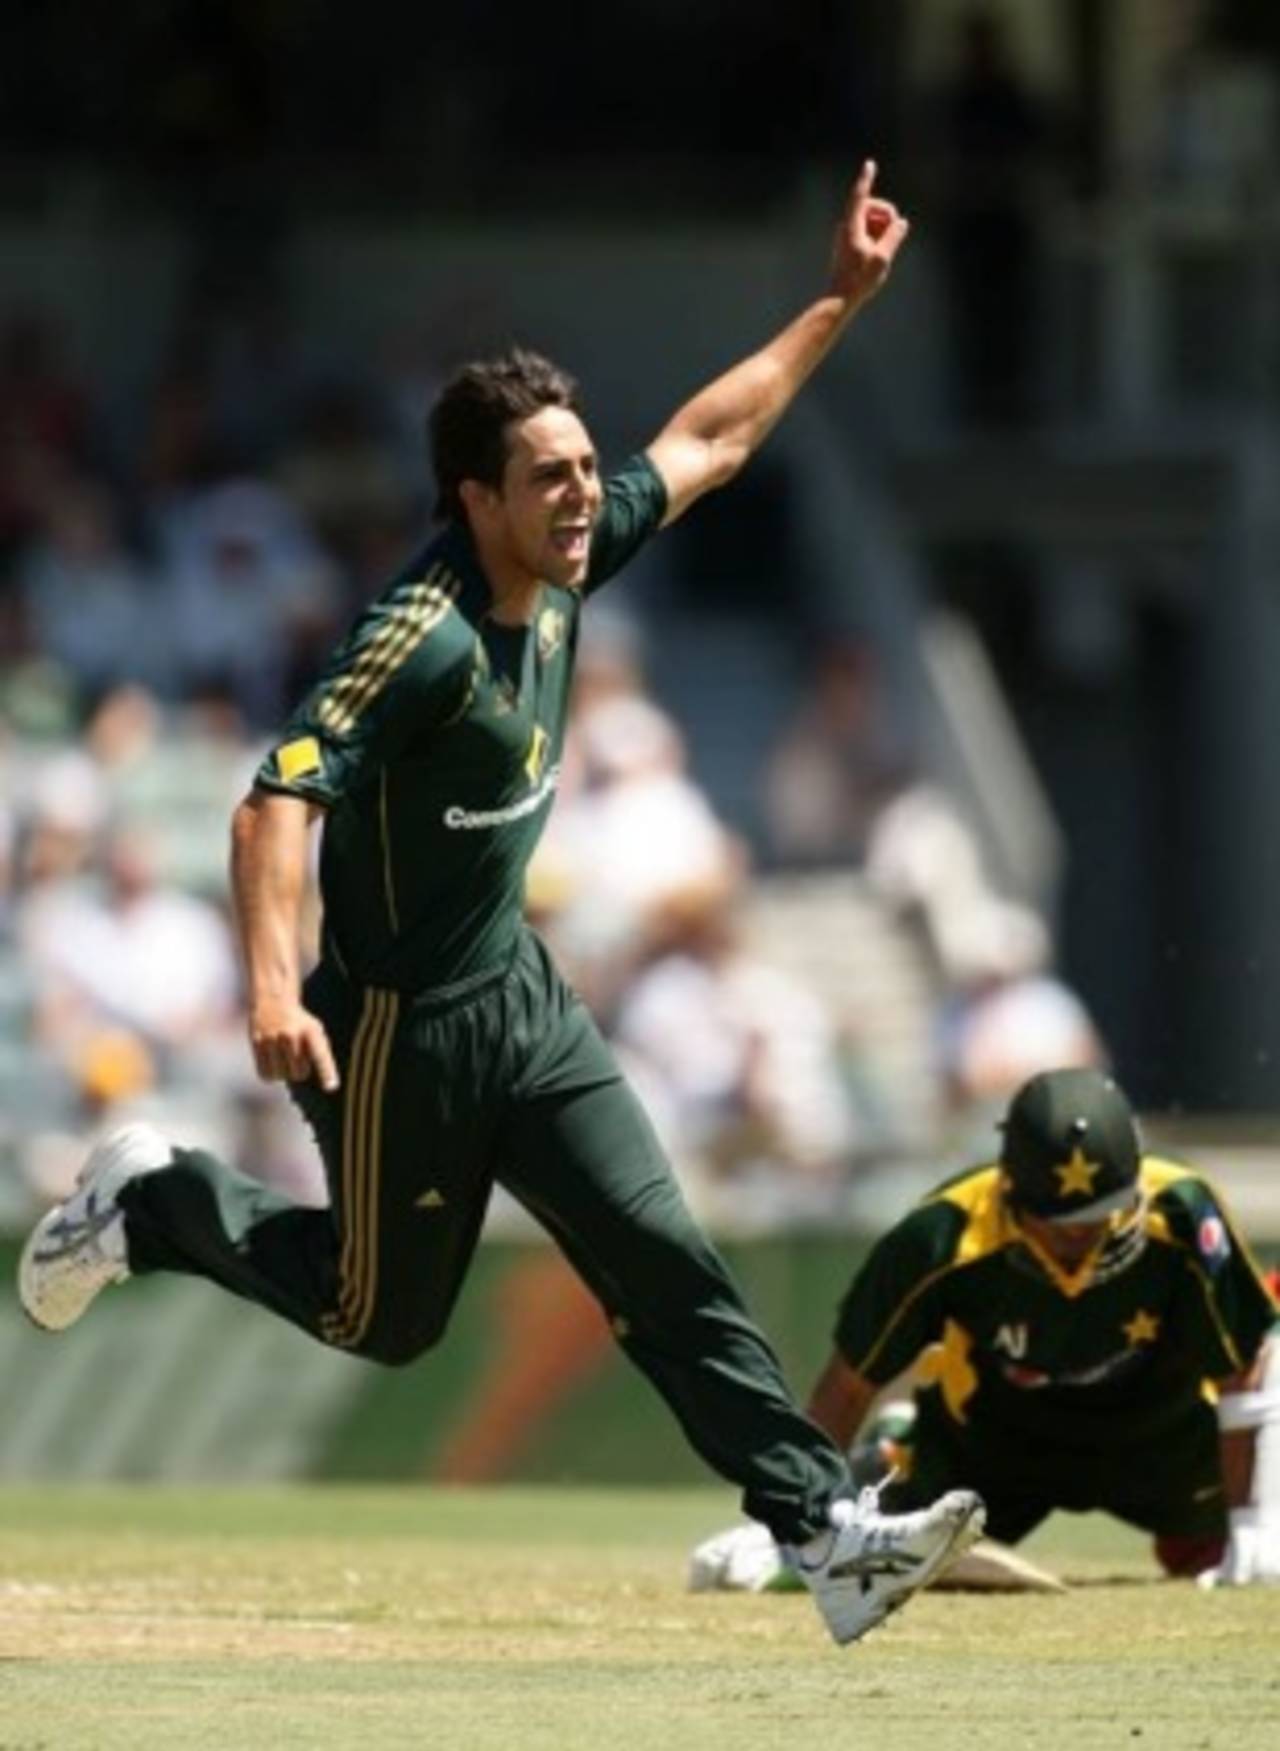 Mitchell Johnson enjoys running out Shoaib Malik, Australia v Pakistan, 5th ODI, Perth, January 31, 2010